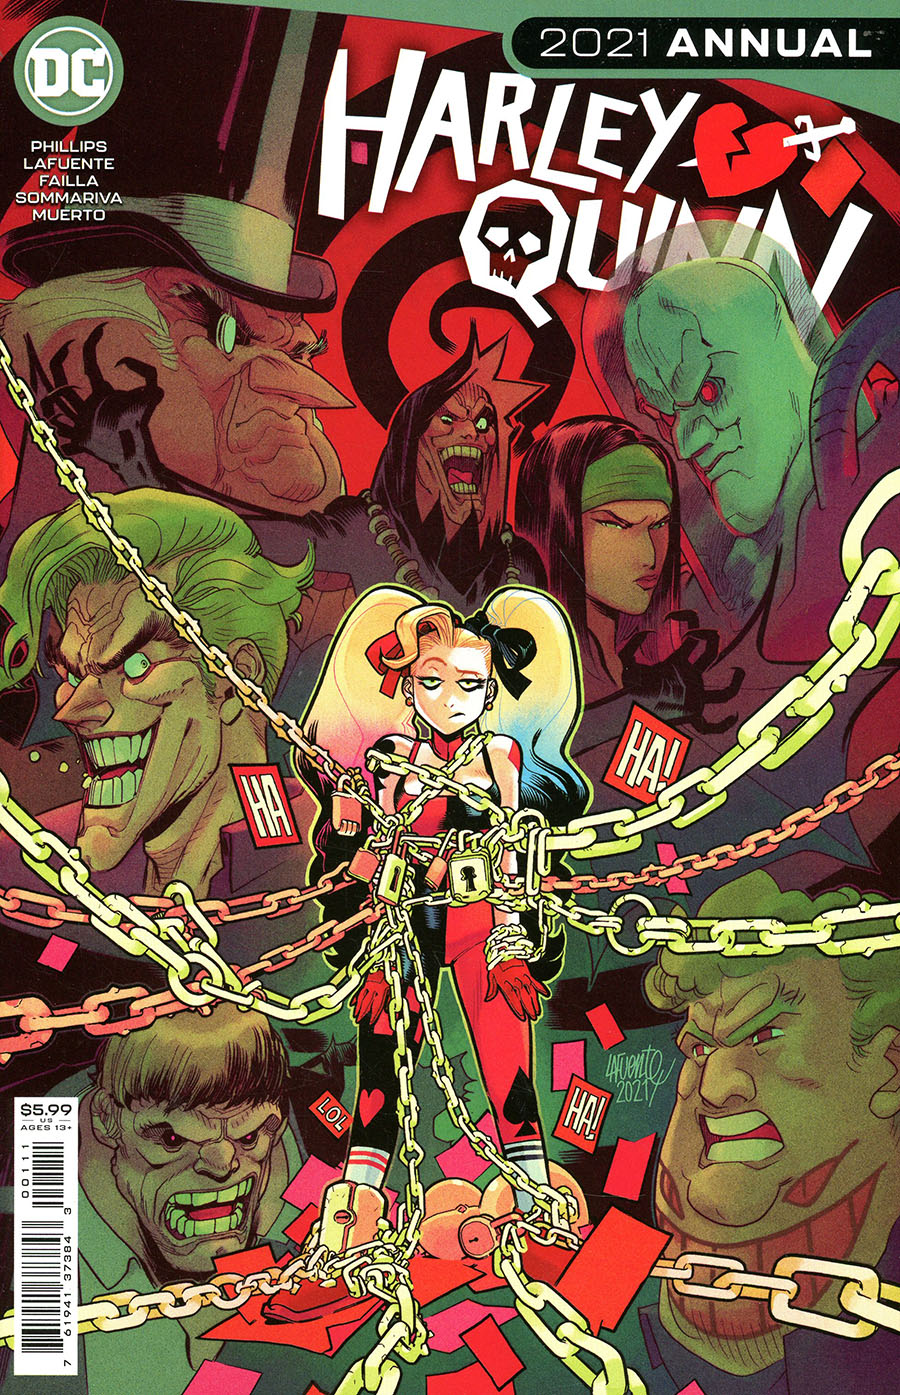 Harley Quinn Vol 4 2021 Annual #1 Cover A Regular David Lafuente Cover